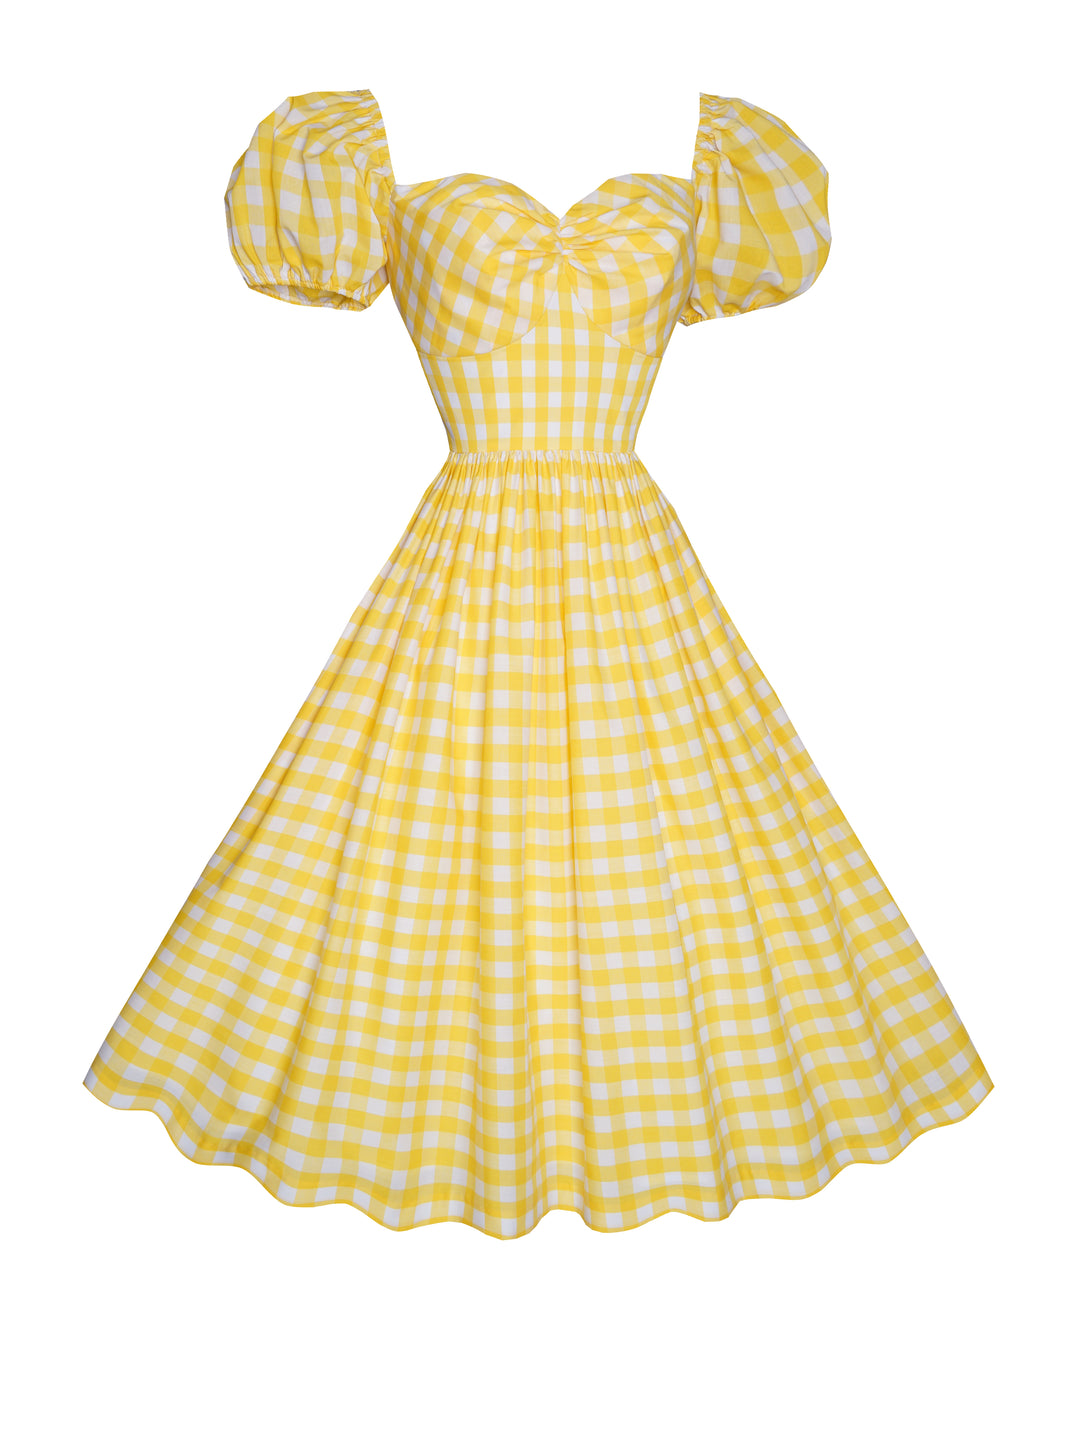 MTO - Valentina Dress in Yellow Gingham - Large Checks